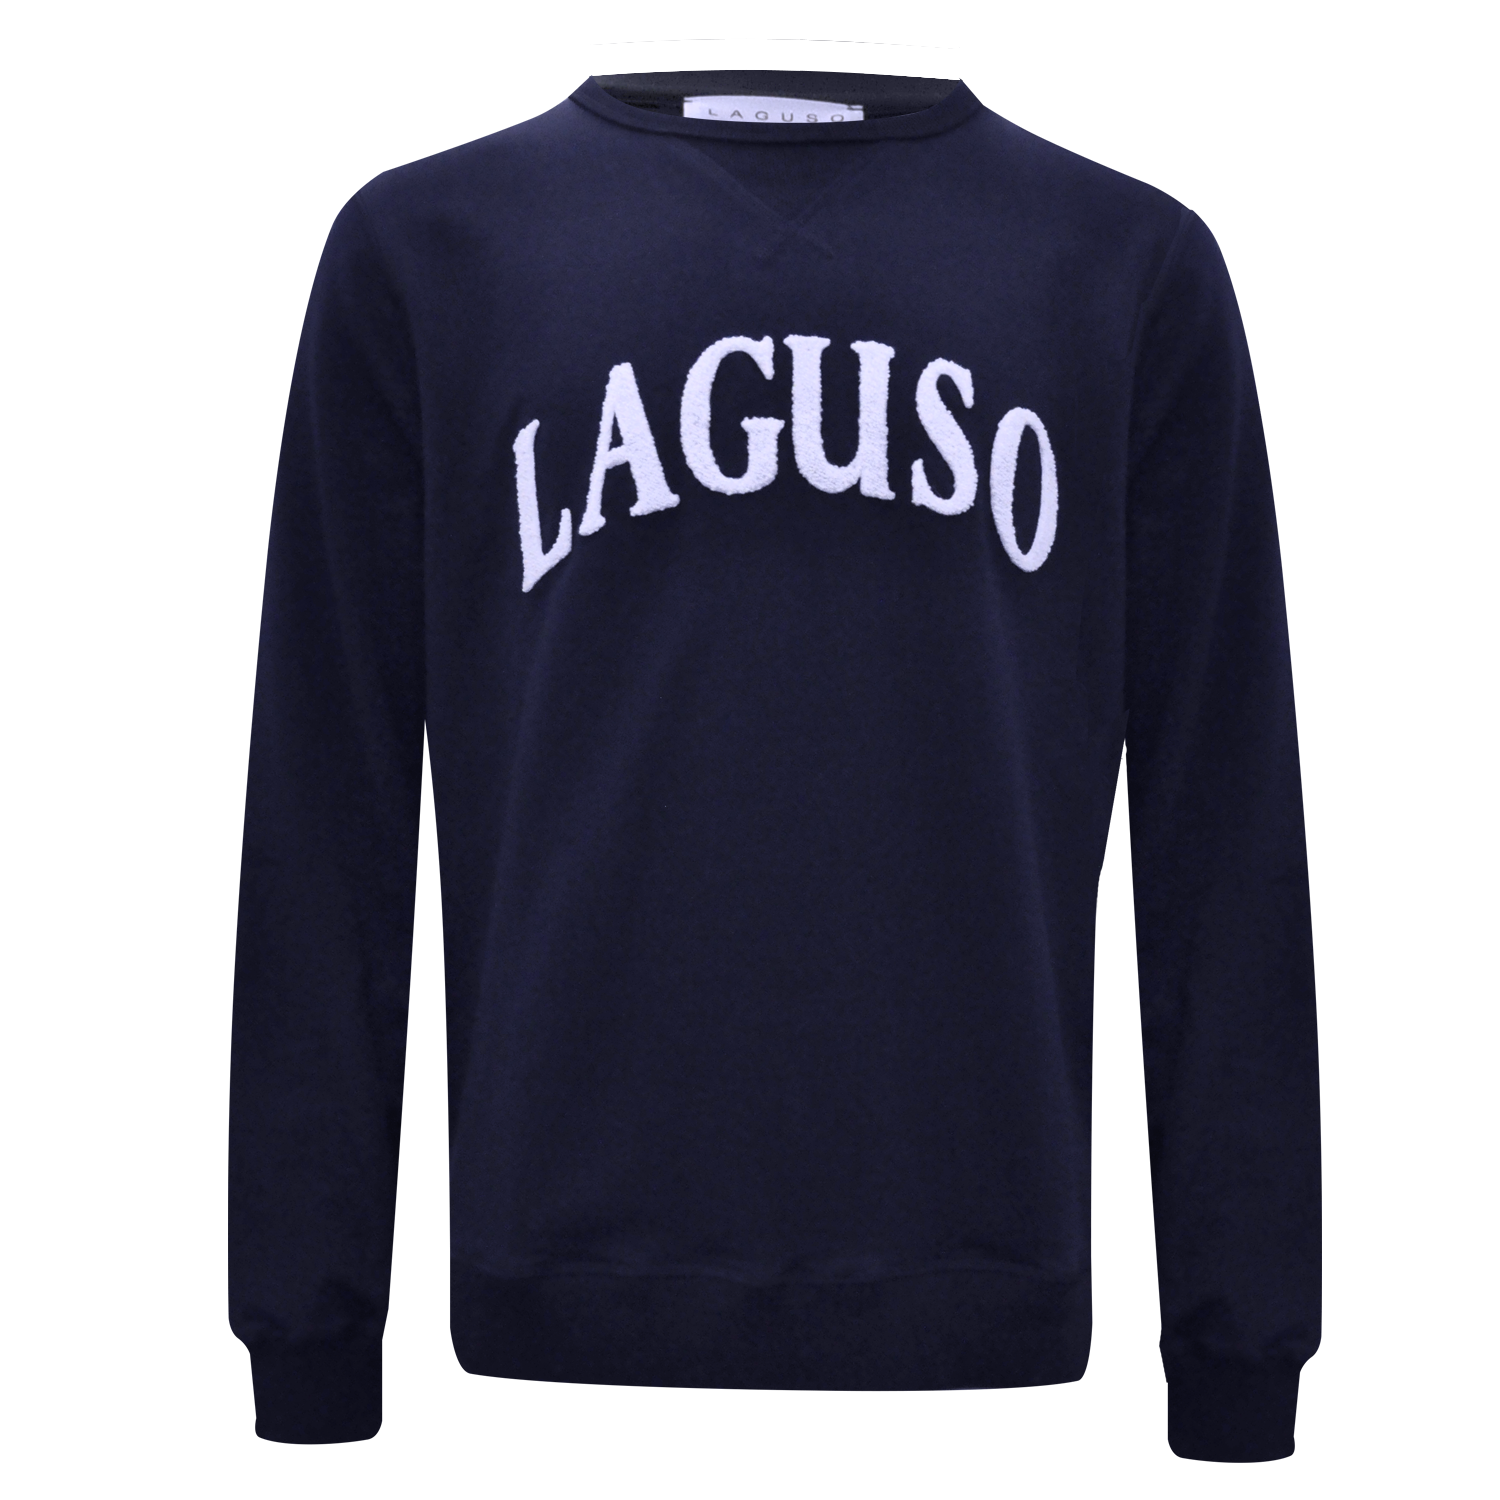 Laguso Flo Navy Flock Sweatshirt